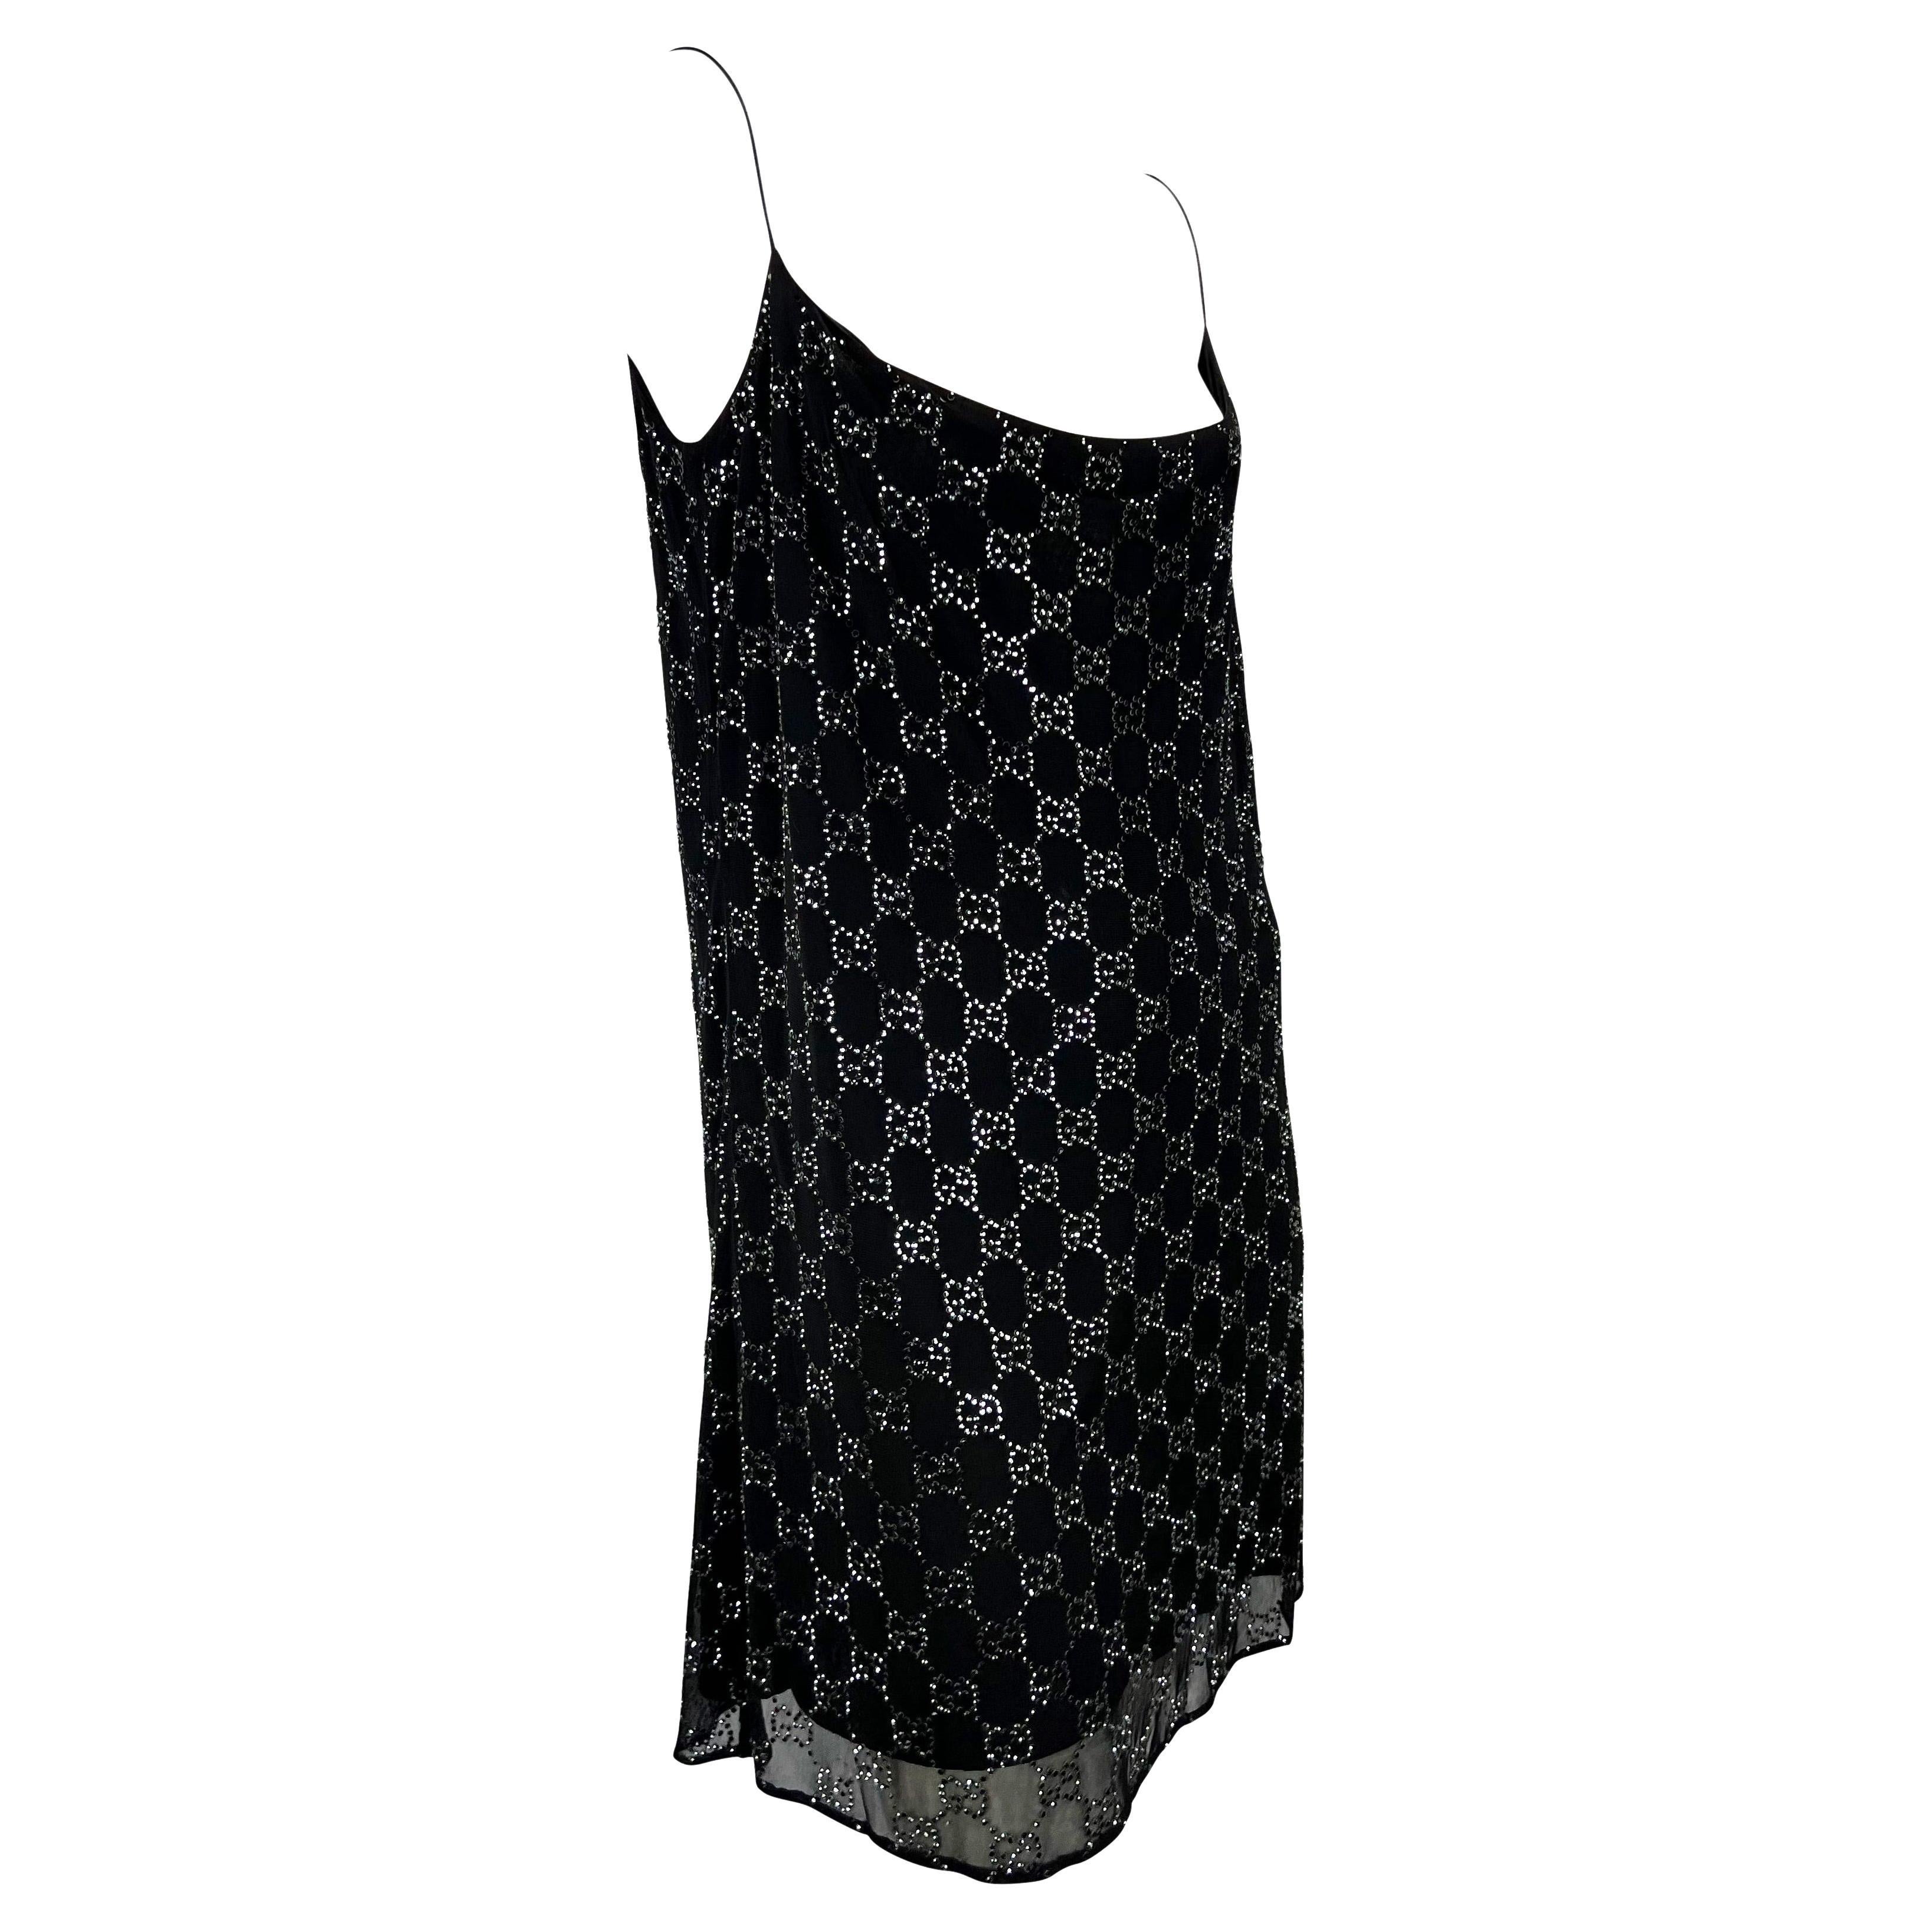 S/S 1998 Gucci by Tom Ford GG Monogram Rhinestone Silk Chiffon Navy Dress For Sale 5